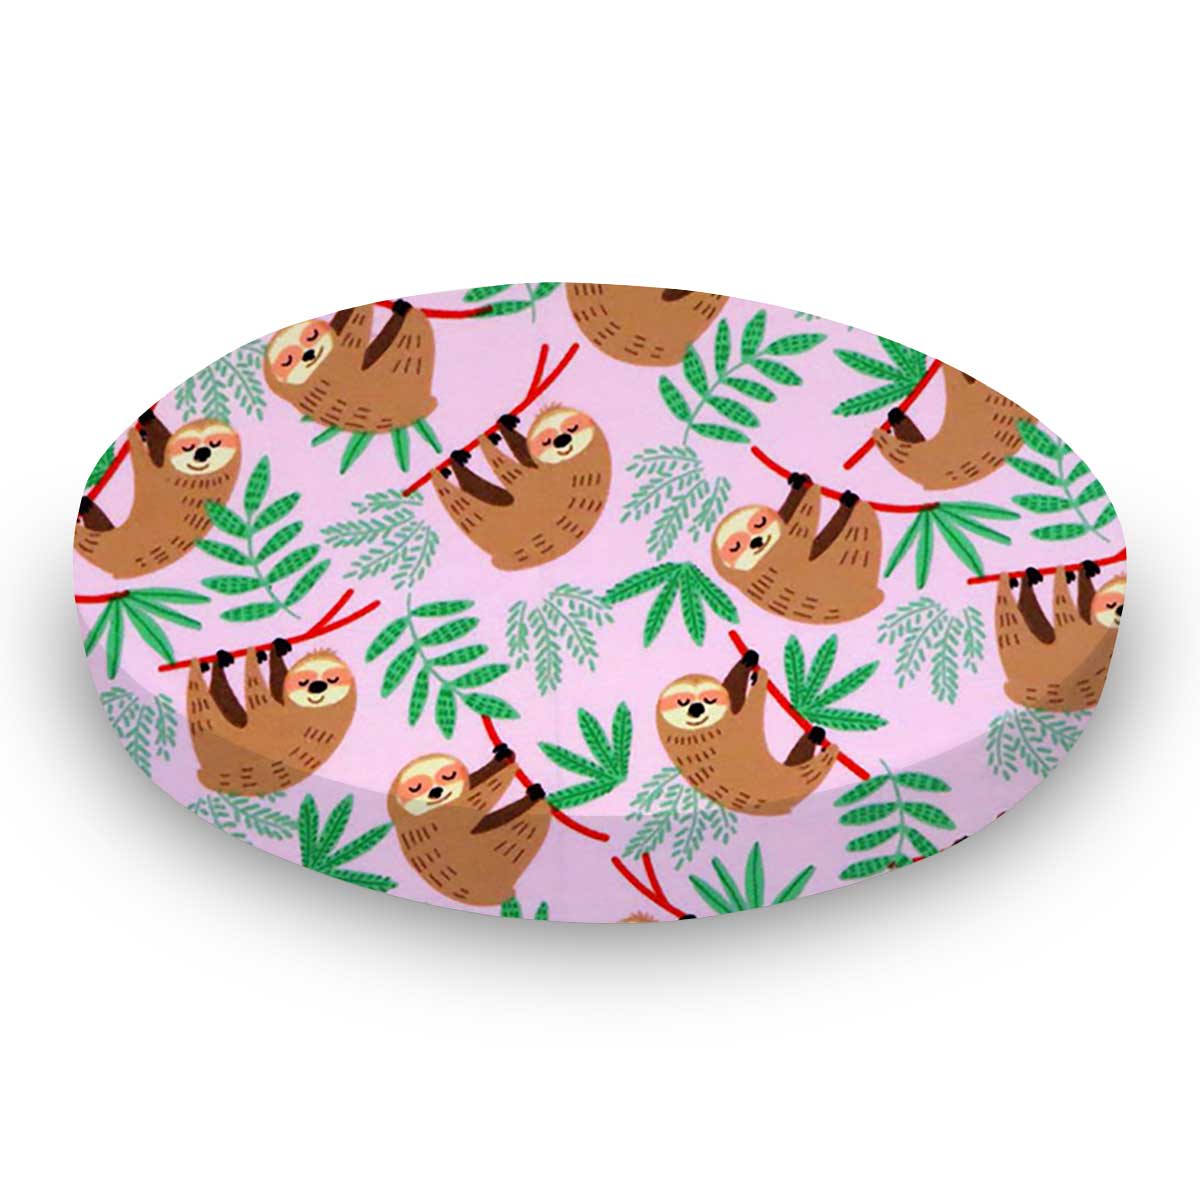 Oval Crib (Stokke Sleepi) - Sloths Pink - Fitted  Oval